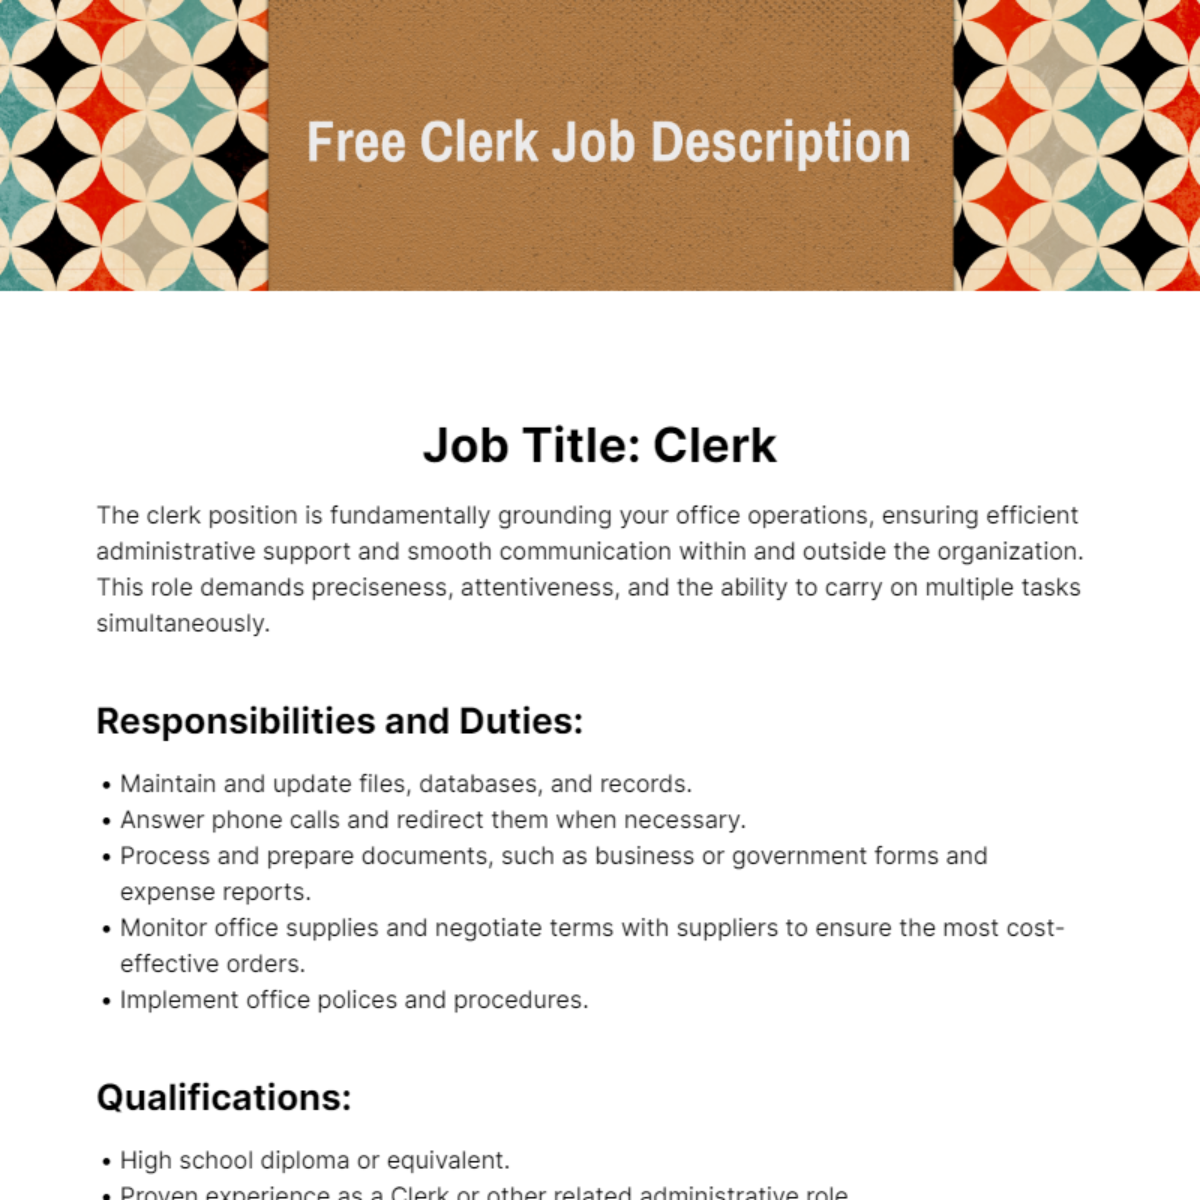 Free Clerk Job Description Template